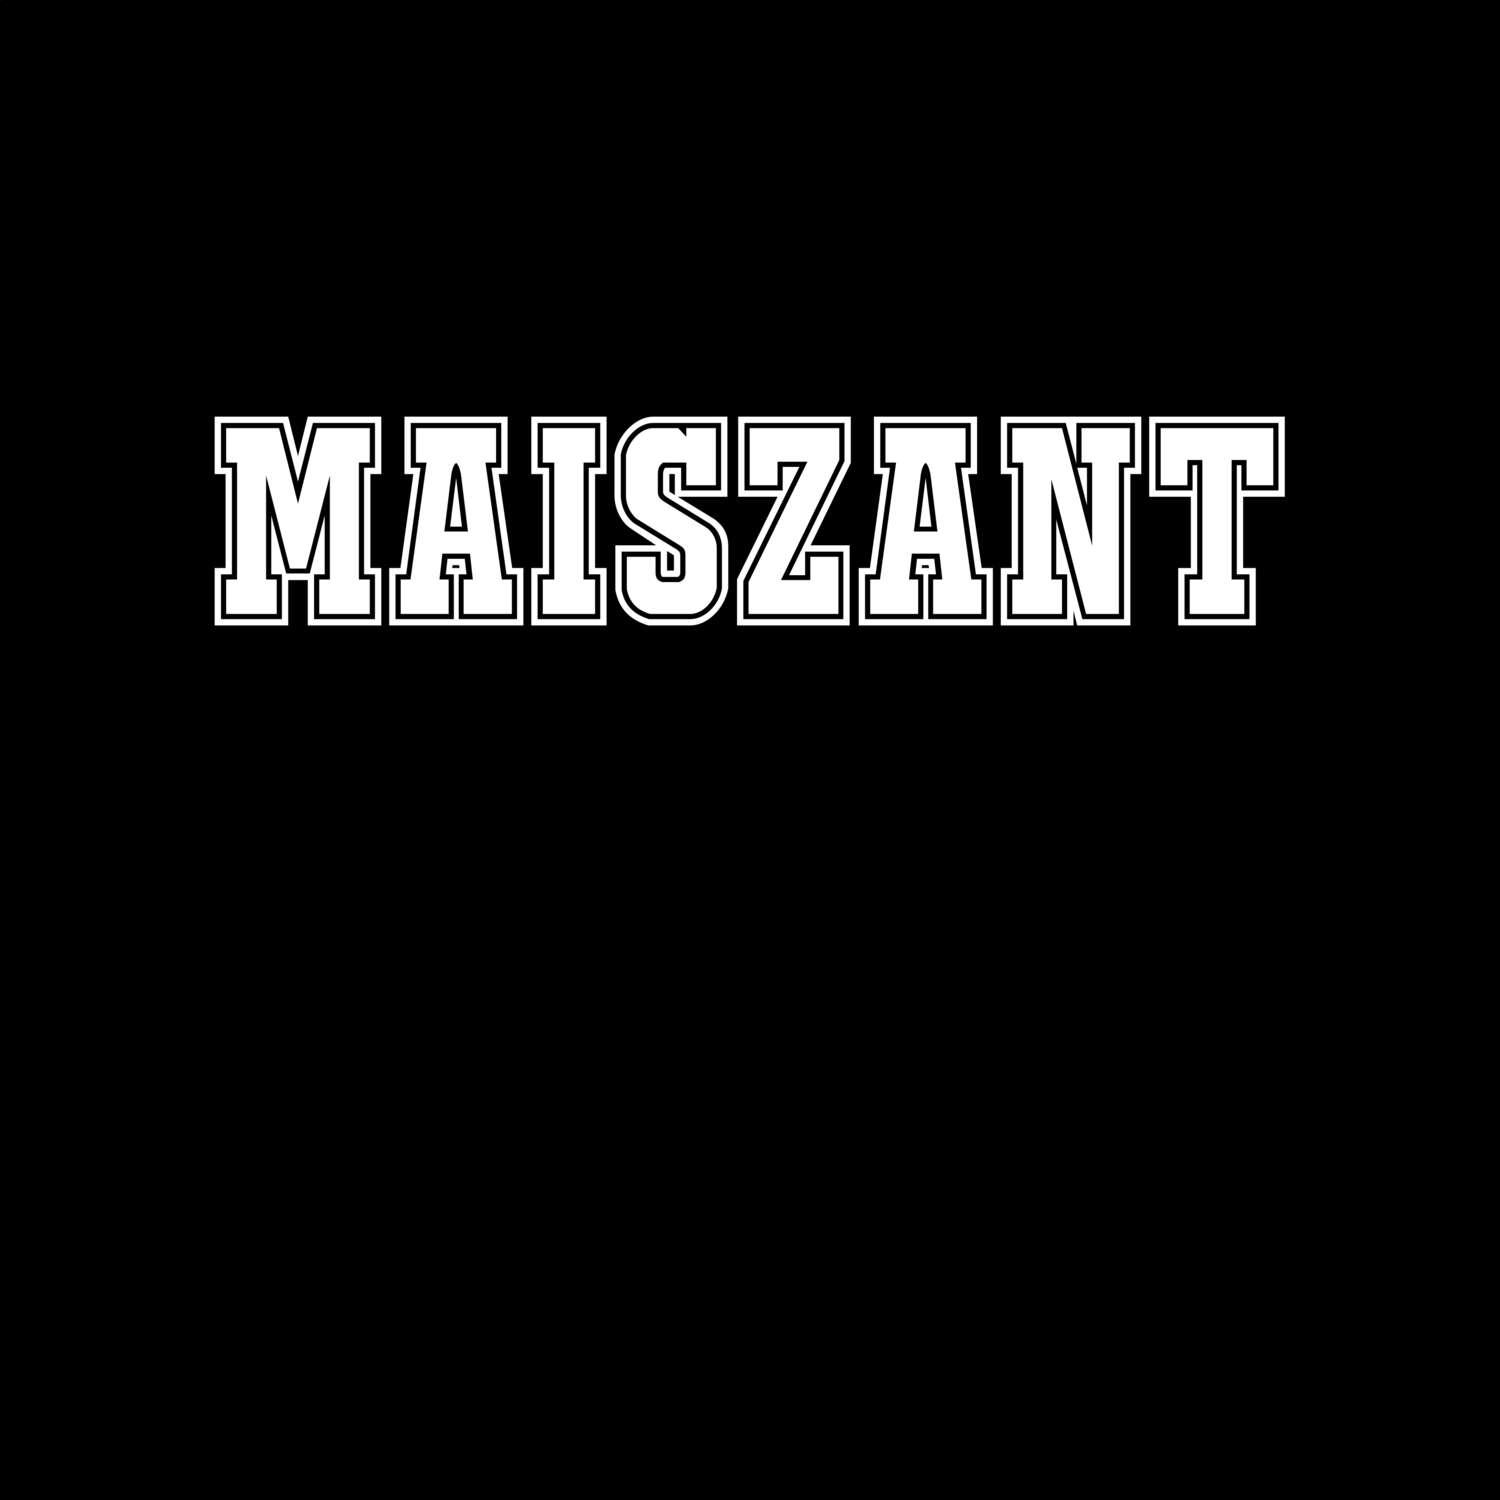 Maiszant T-Shirt »Classic«